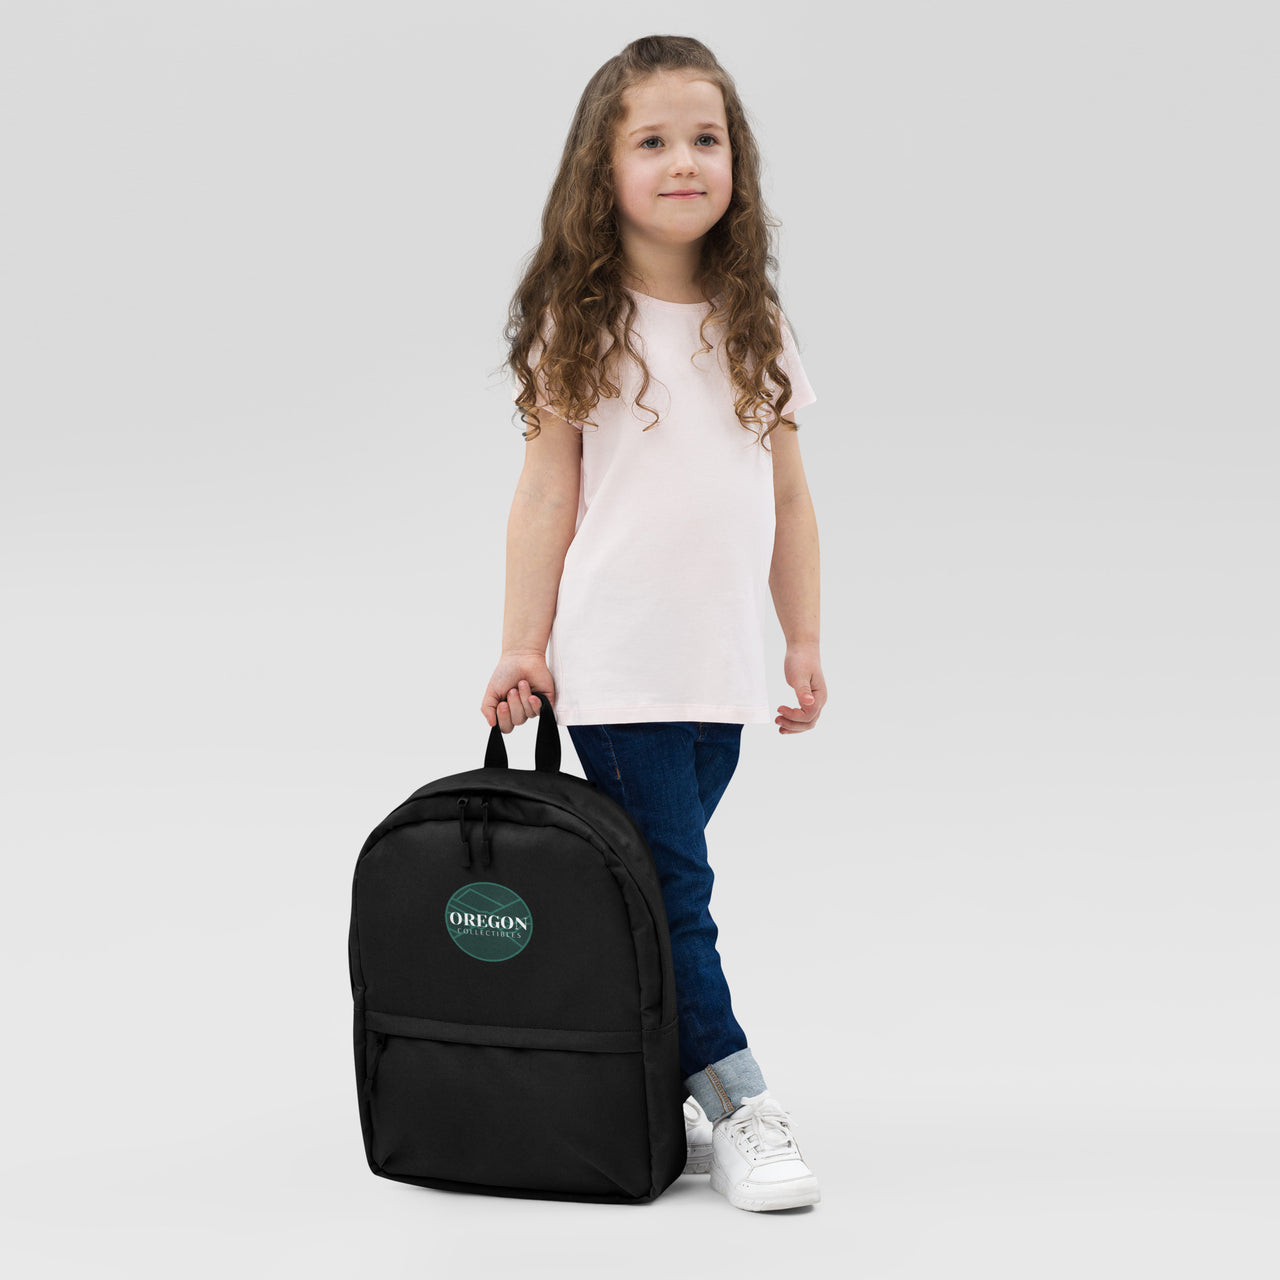 Oregon Collectibles - (Black) - Backpack